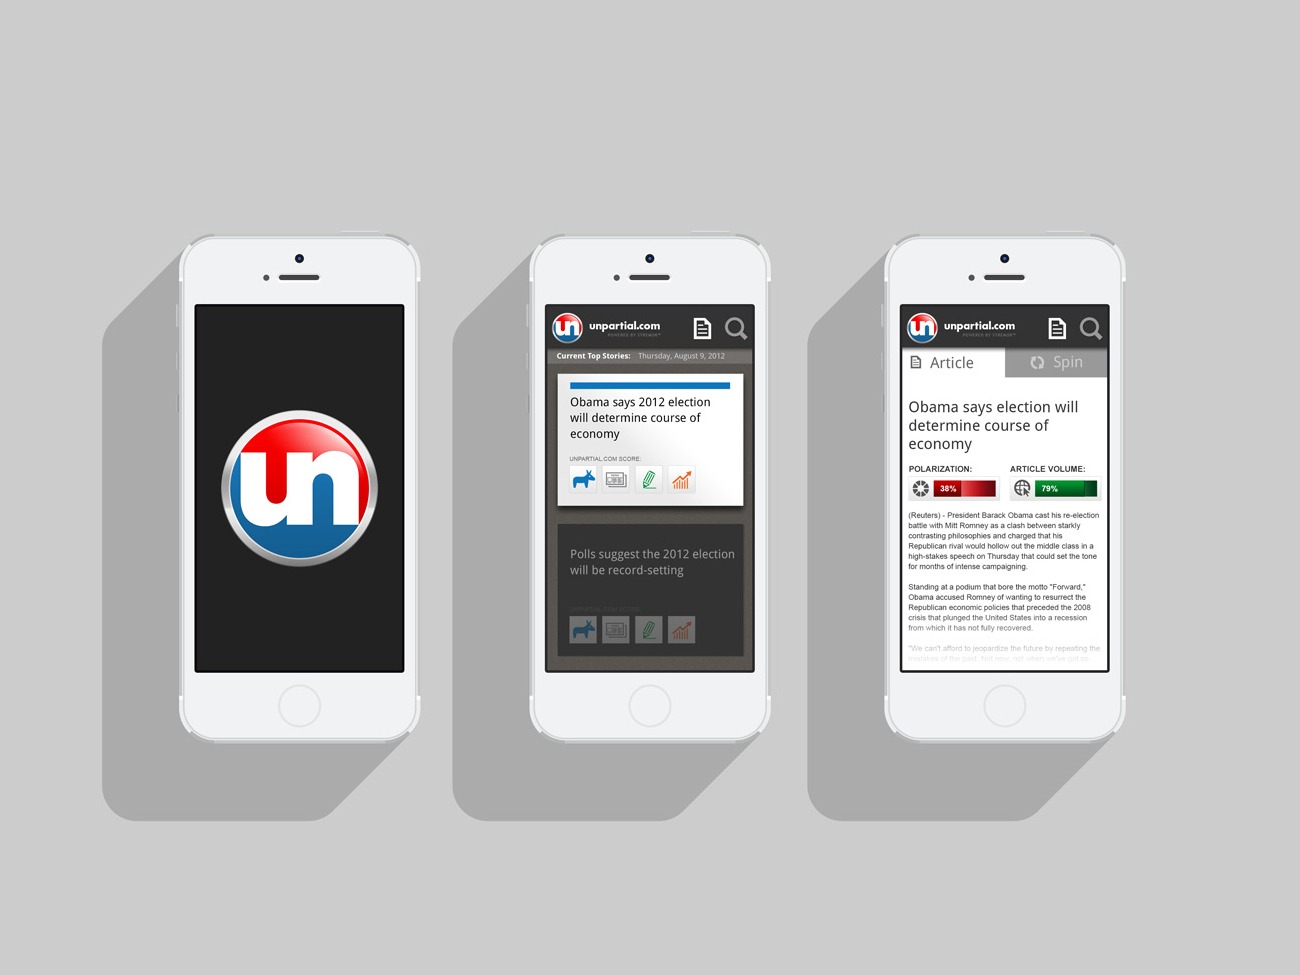 Unpartial.com Branding and Mobile Application Design